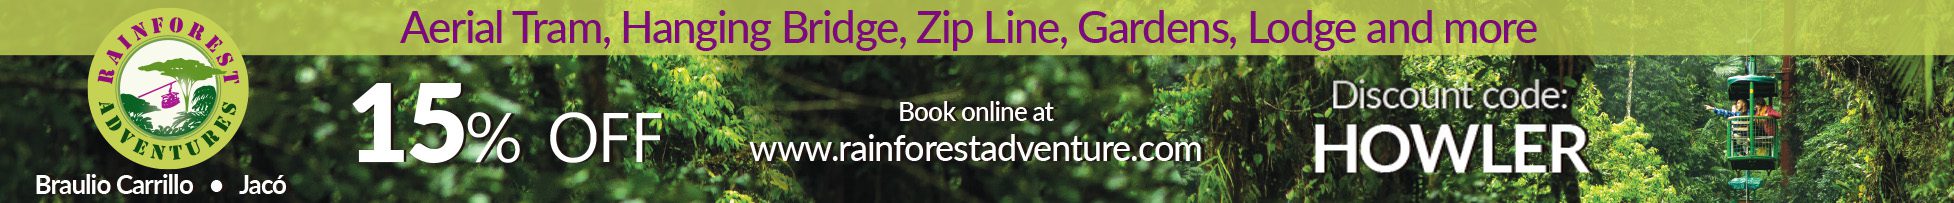 Rainforest Adventures Costa Rica promo code discount code Howler